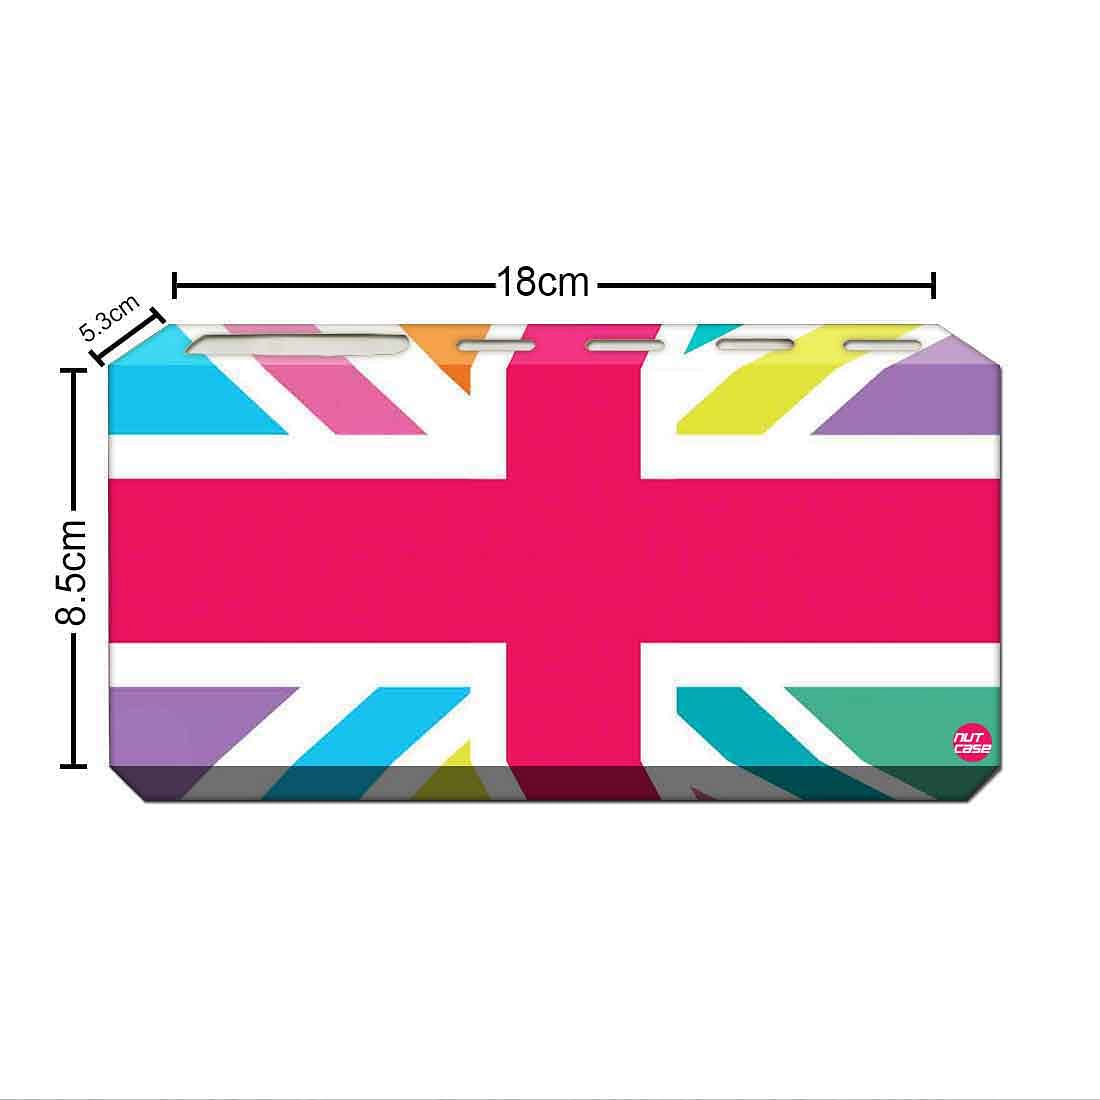 Toothbrush Holder Wall Mounted -Multicolor Union Jack British Flag Nutcase